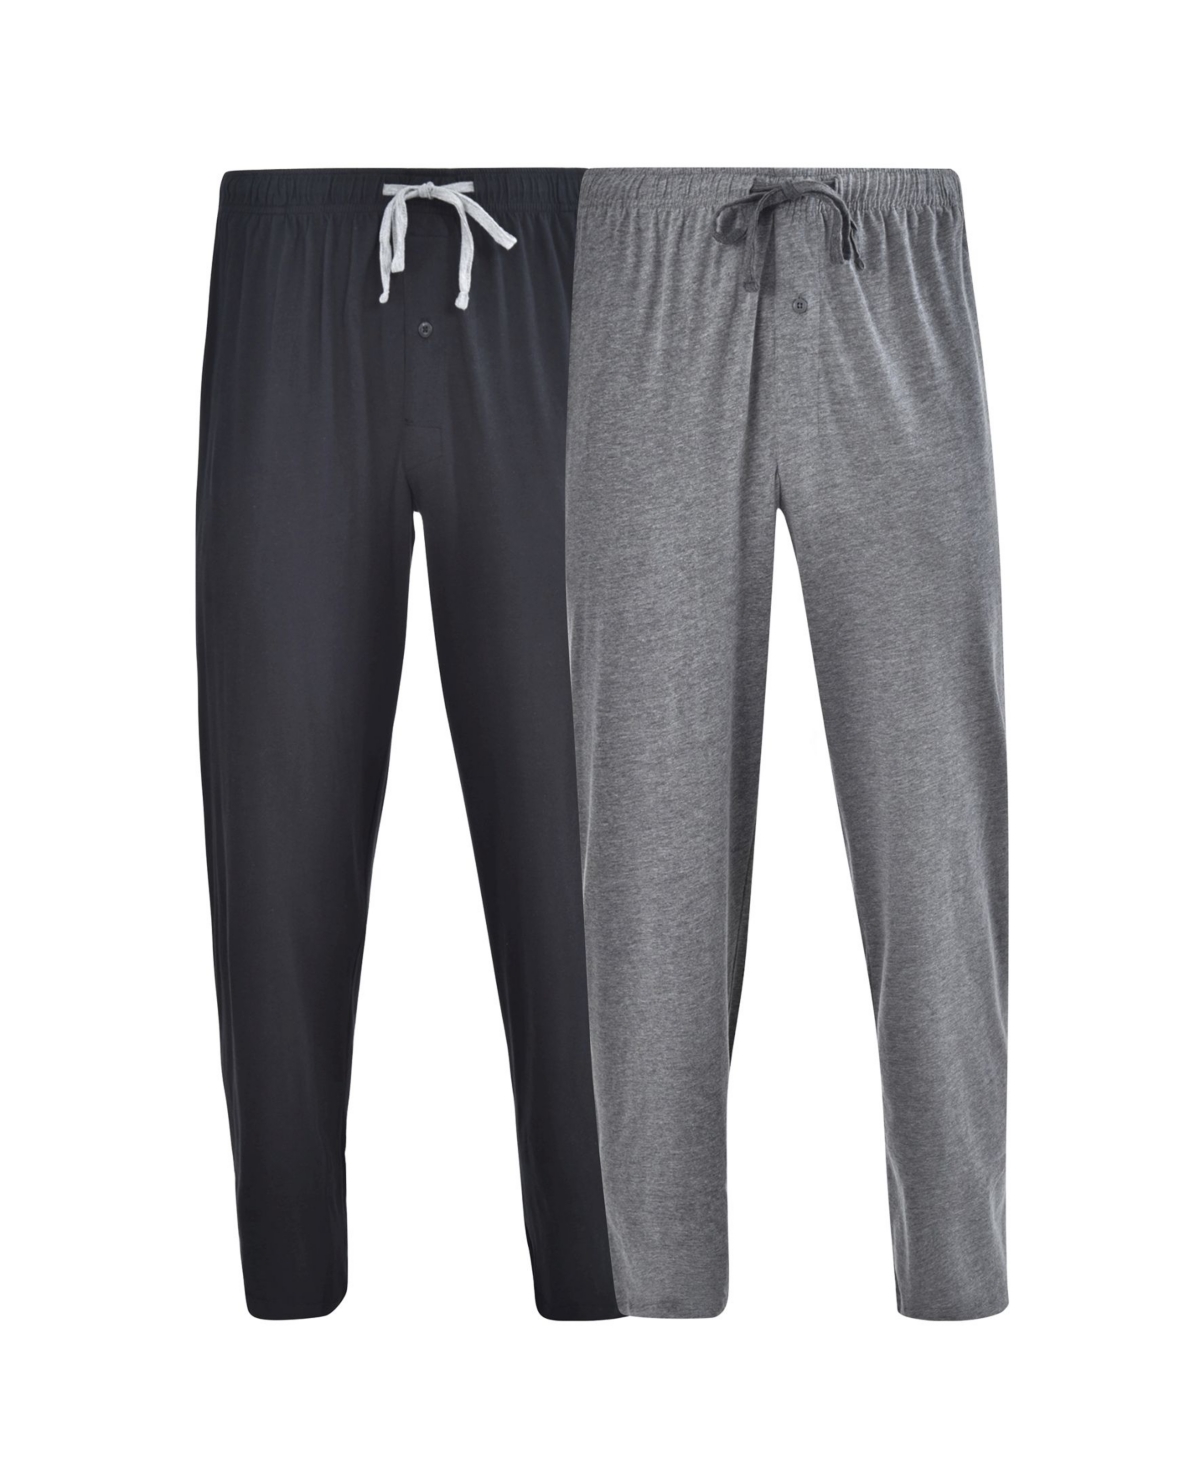 Men's Big and Tall Knit Pant, 2 Pack - Black/Grey